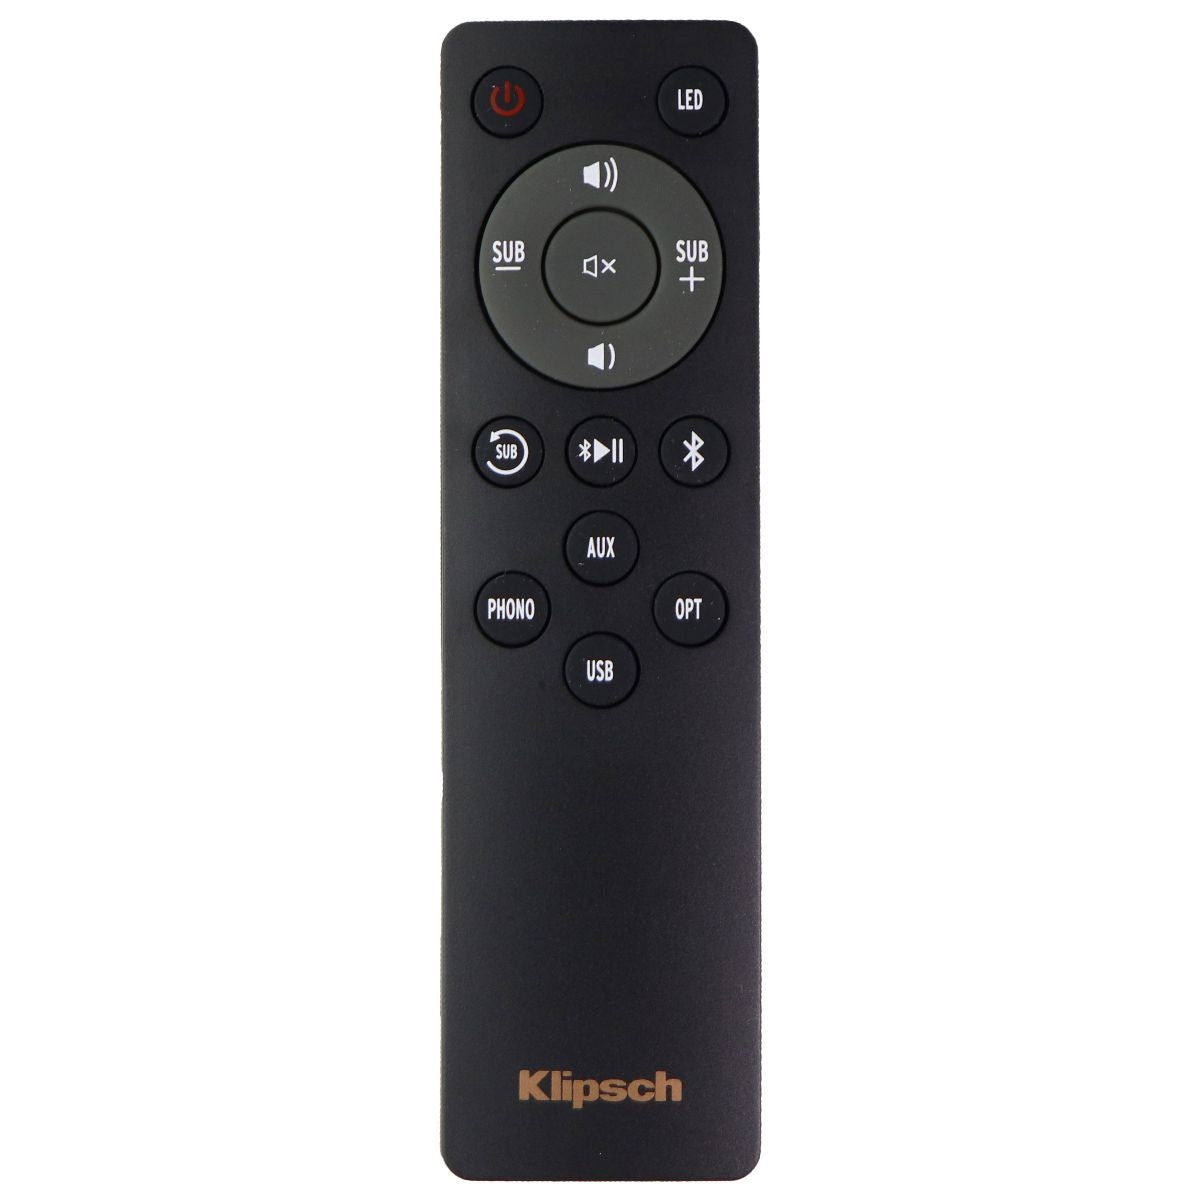 Klipsch OEM Audio System Remote Control - Black TV, Video & Audio Accessories - Remote Controls Klipsch    - Simple Cell Bulk Wholesale Pricing - USA Seller